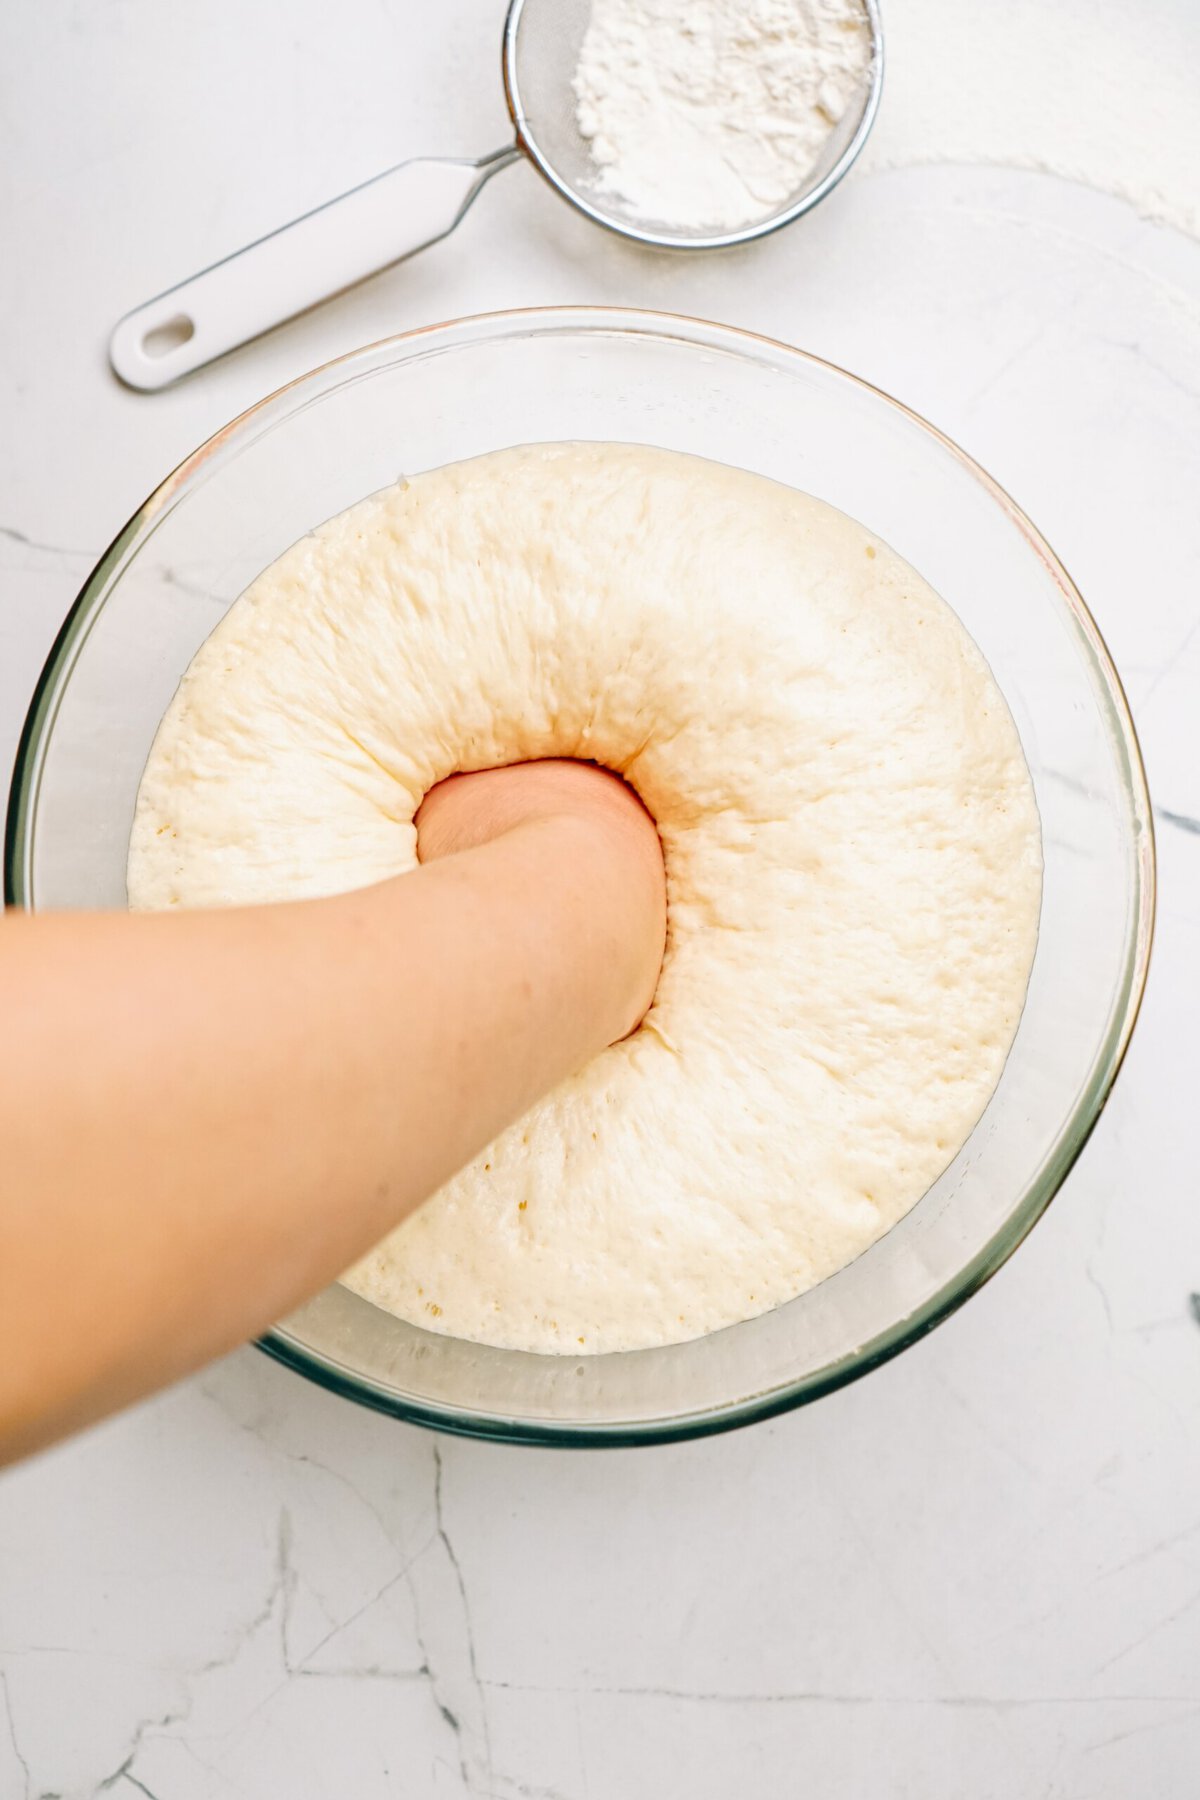 a person punching down the risen dough